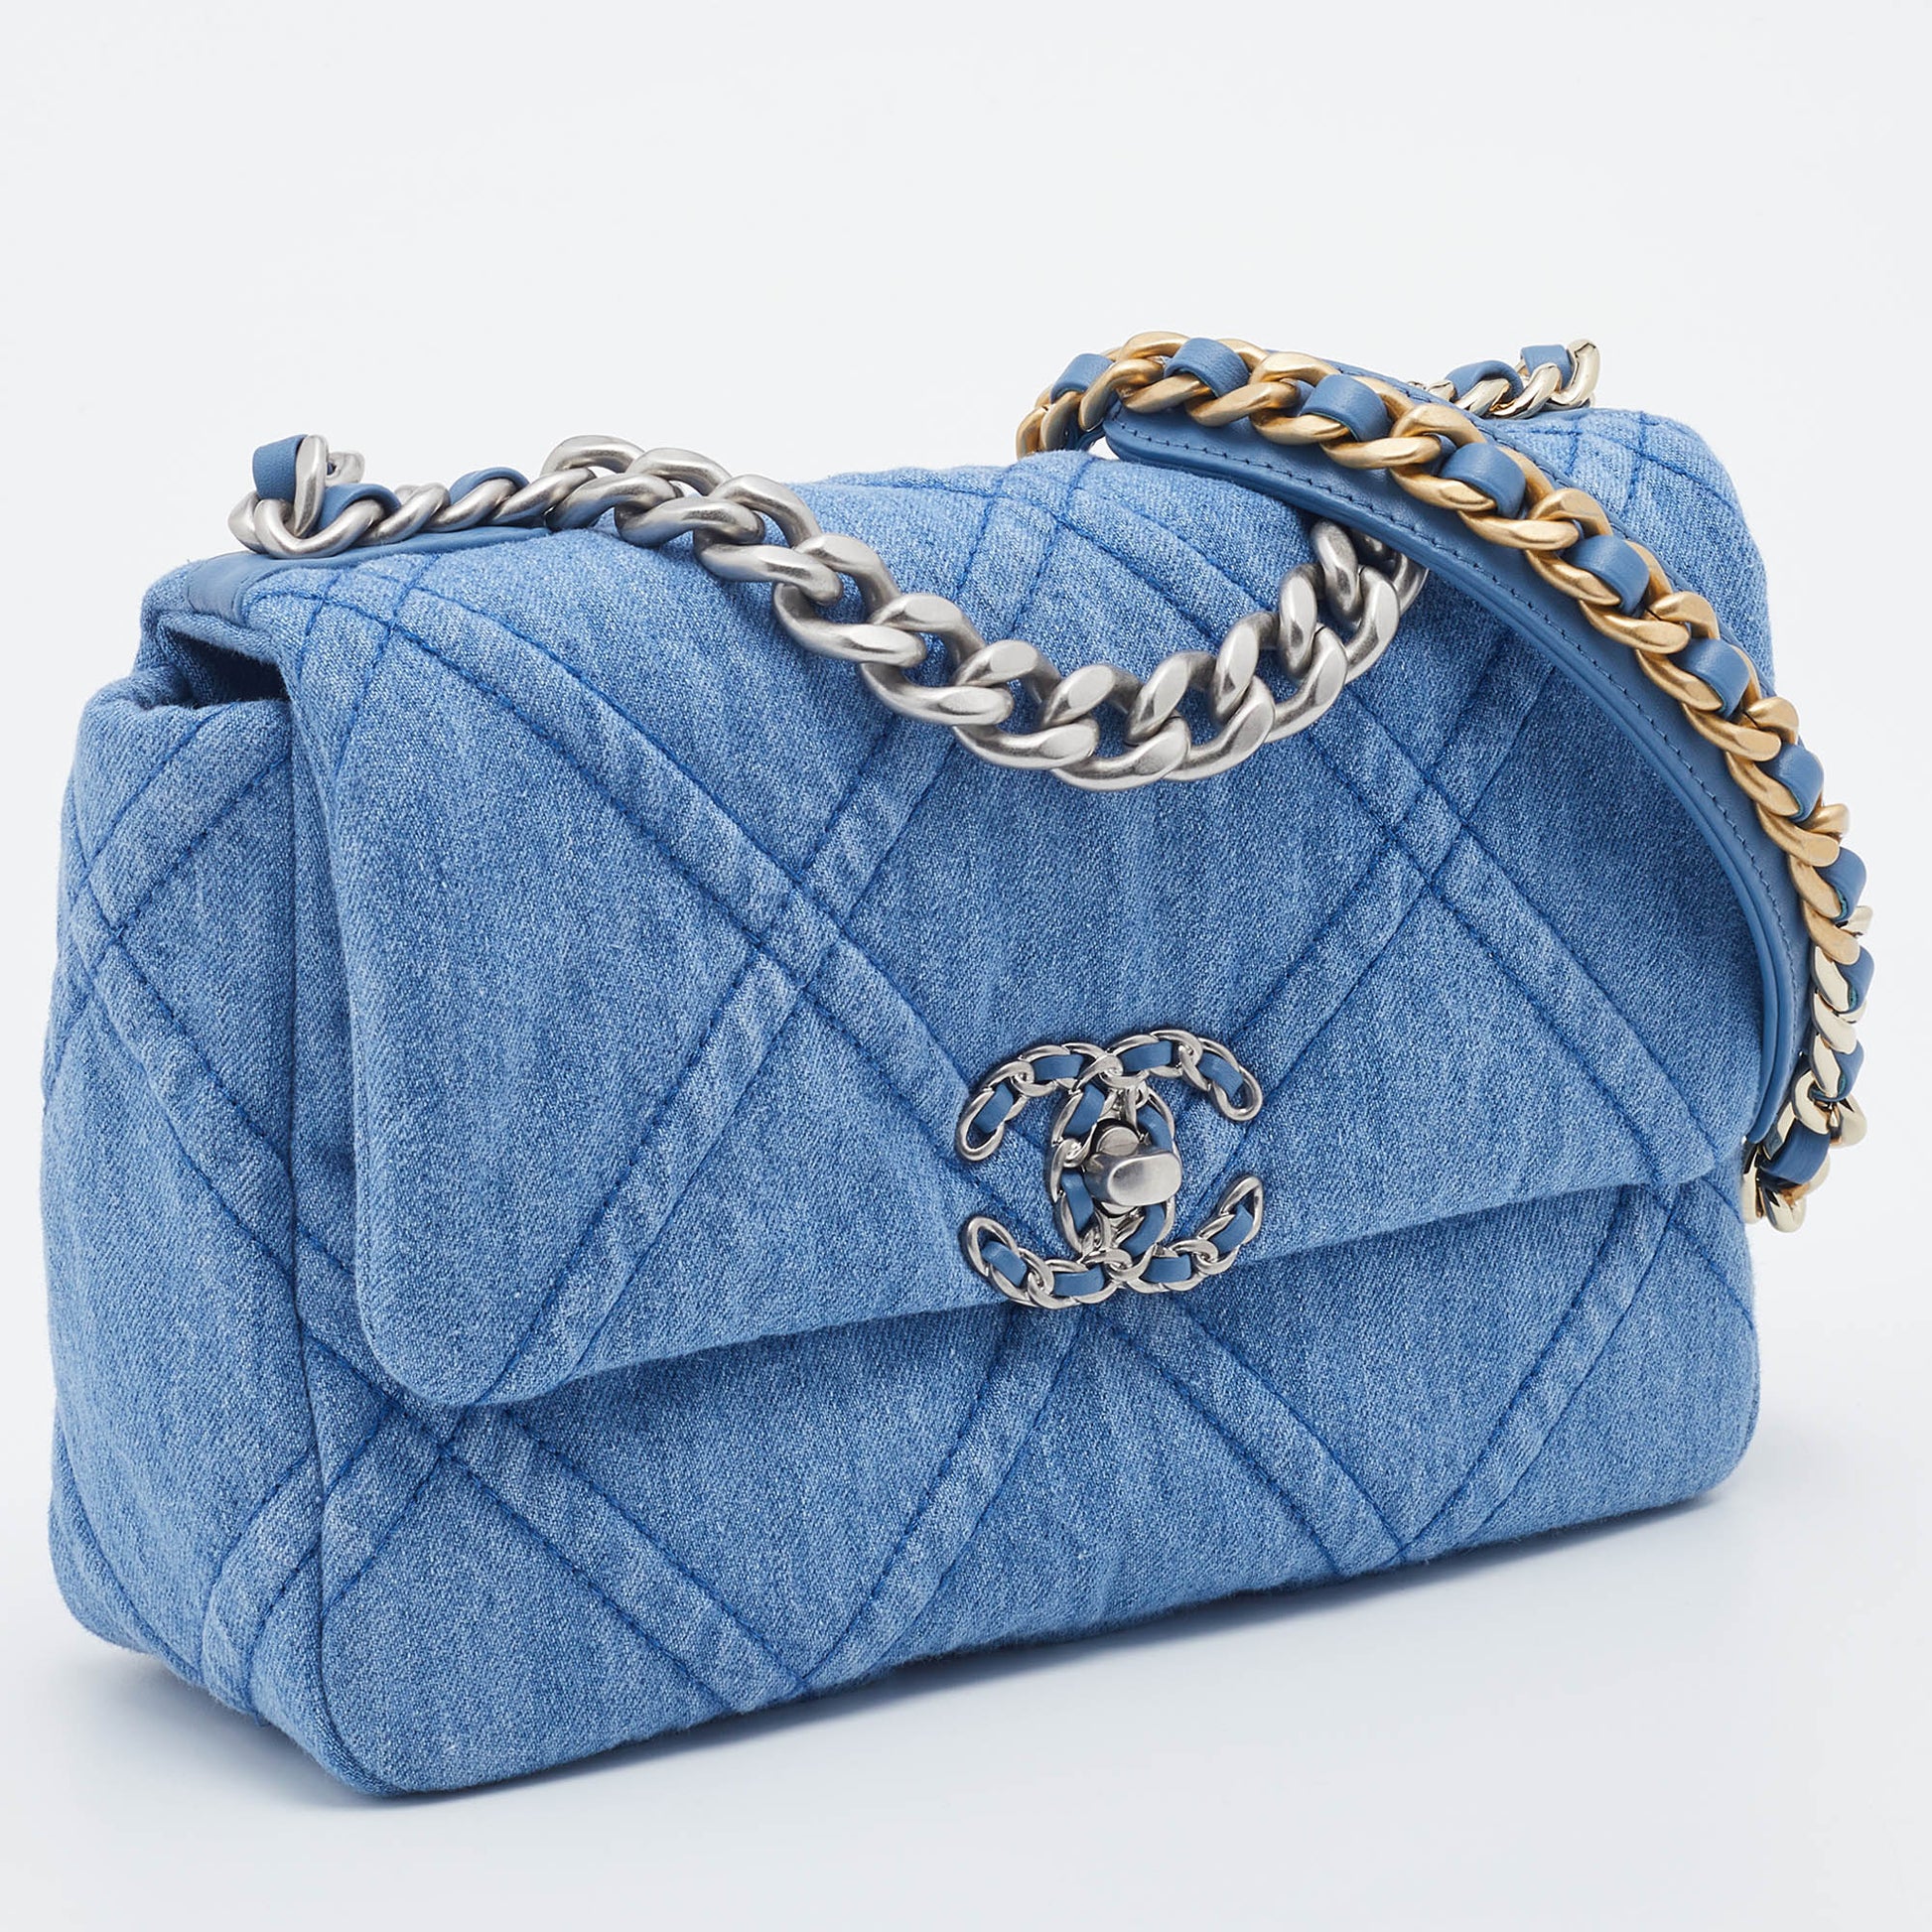 Chanel 19 Denim Handbag is Spring IT bag!